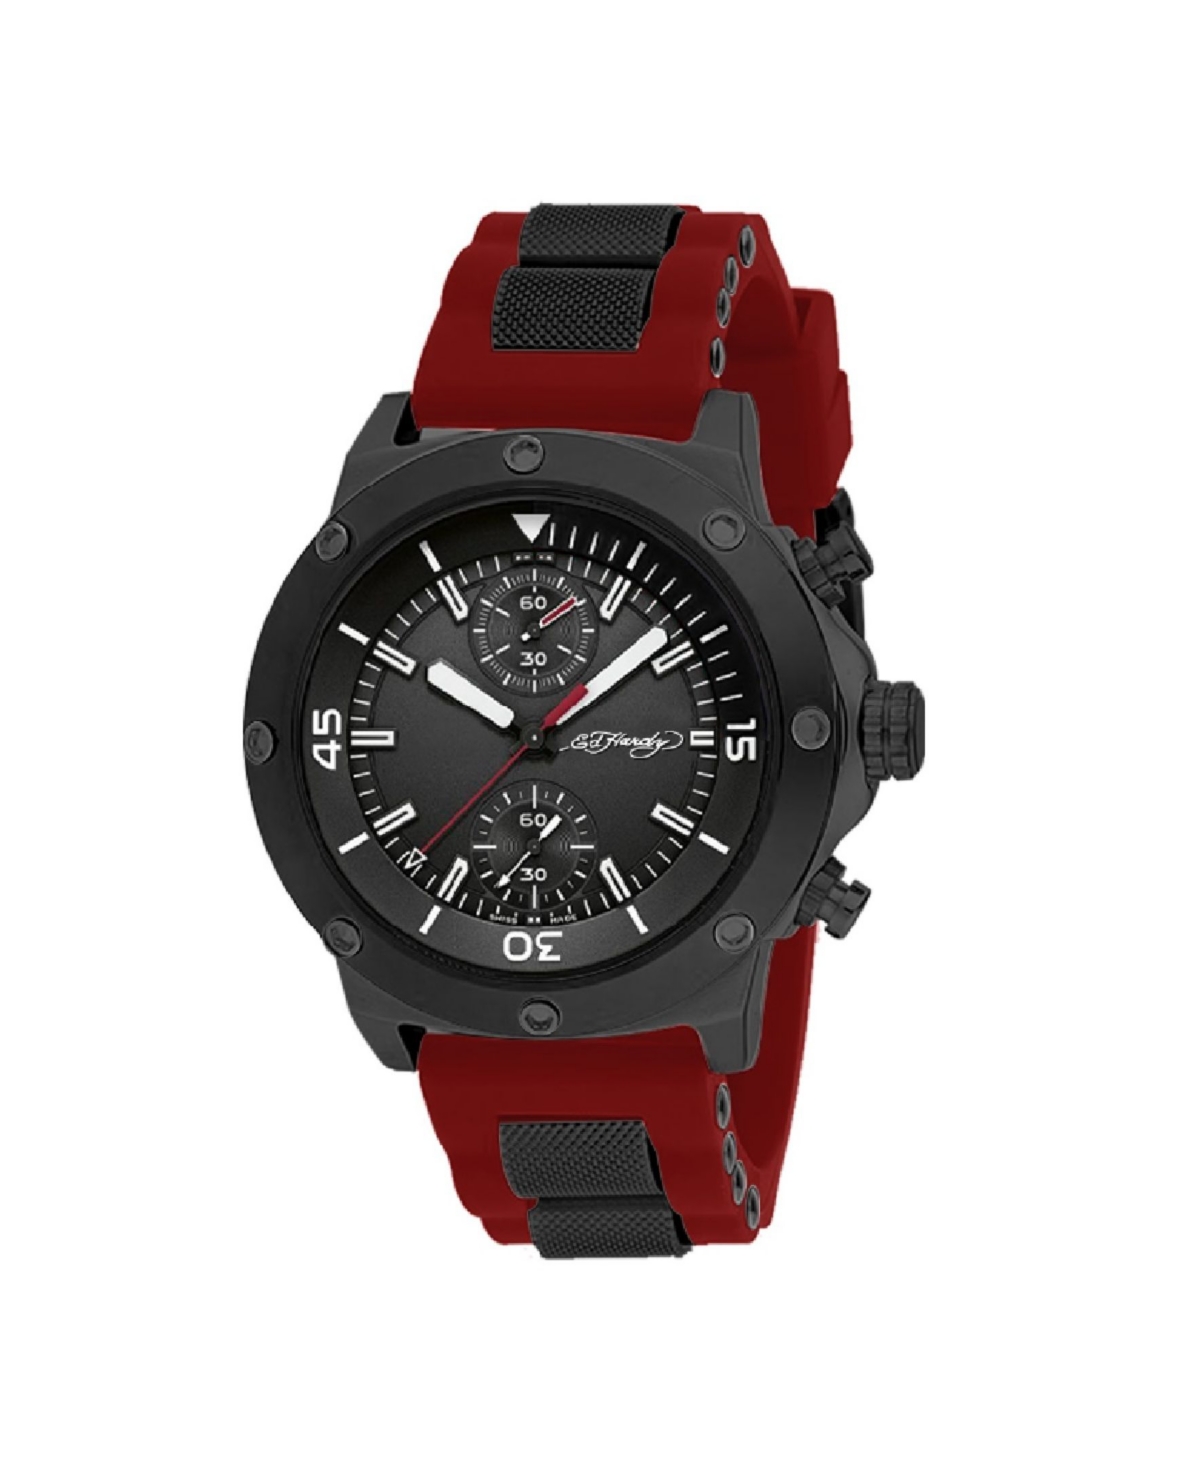 Men's Red Silicone Strap Watch 52mm - Matte Black, Red